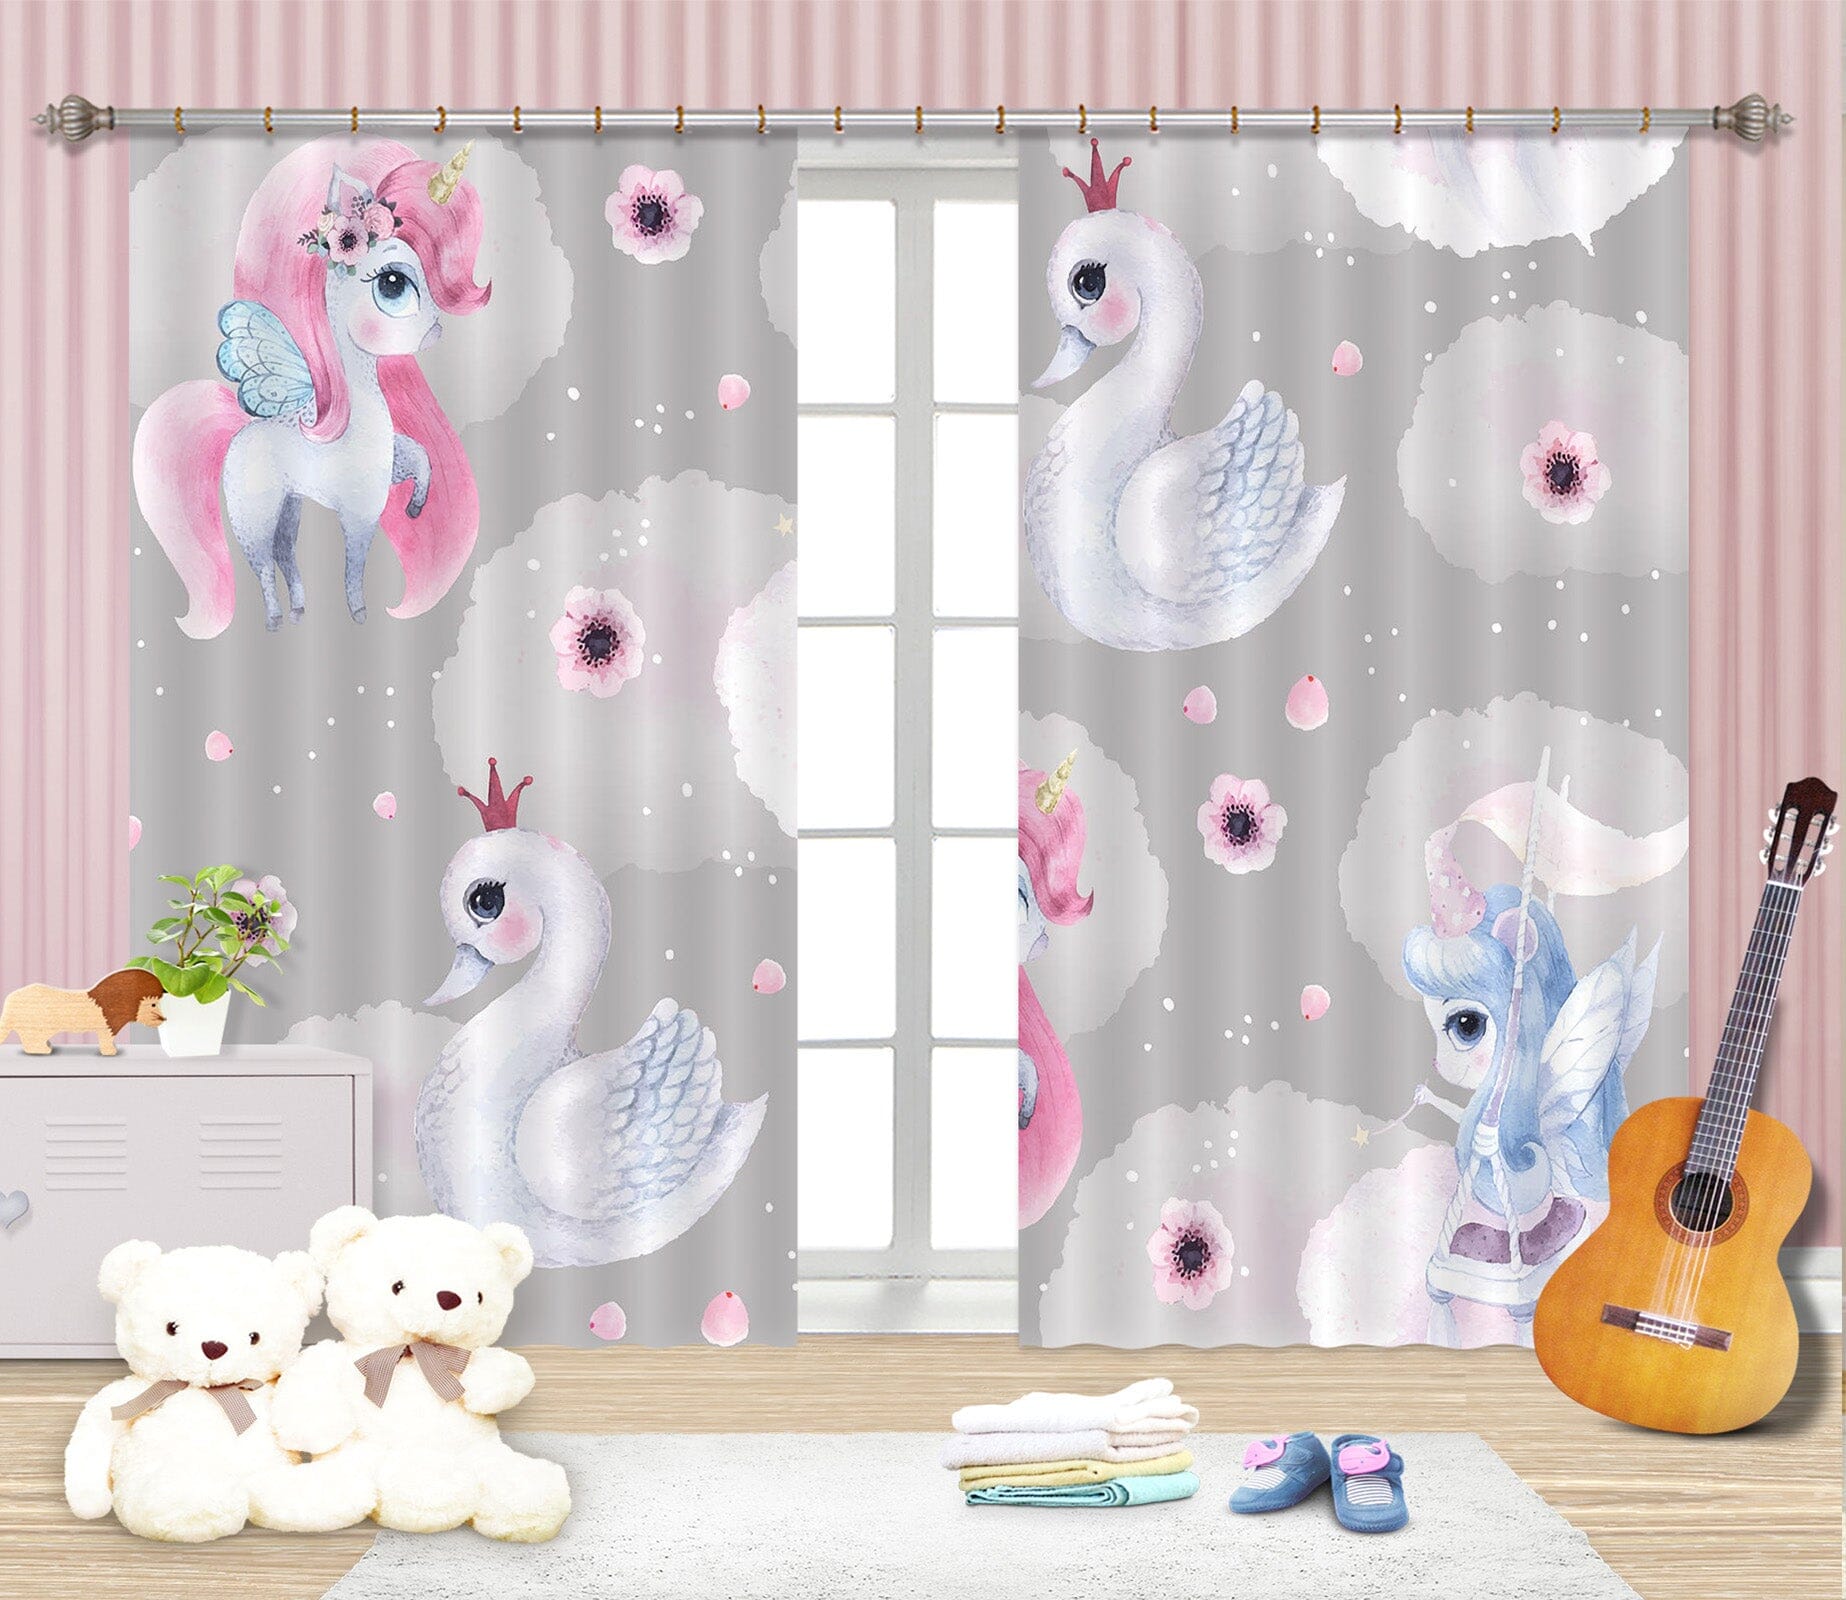 3D Cute Animal 791 Curtains Drapes Wallpaper AJ Wallpaper 